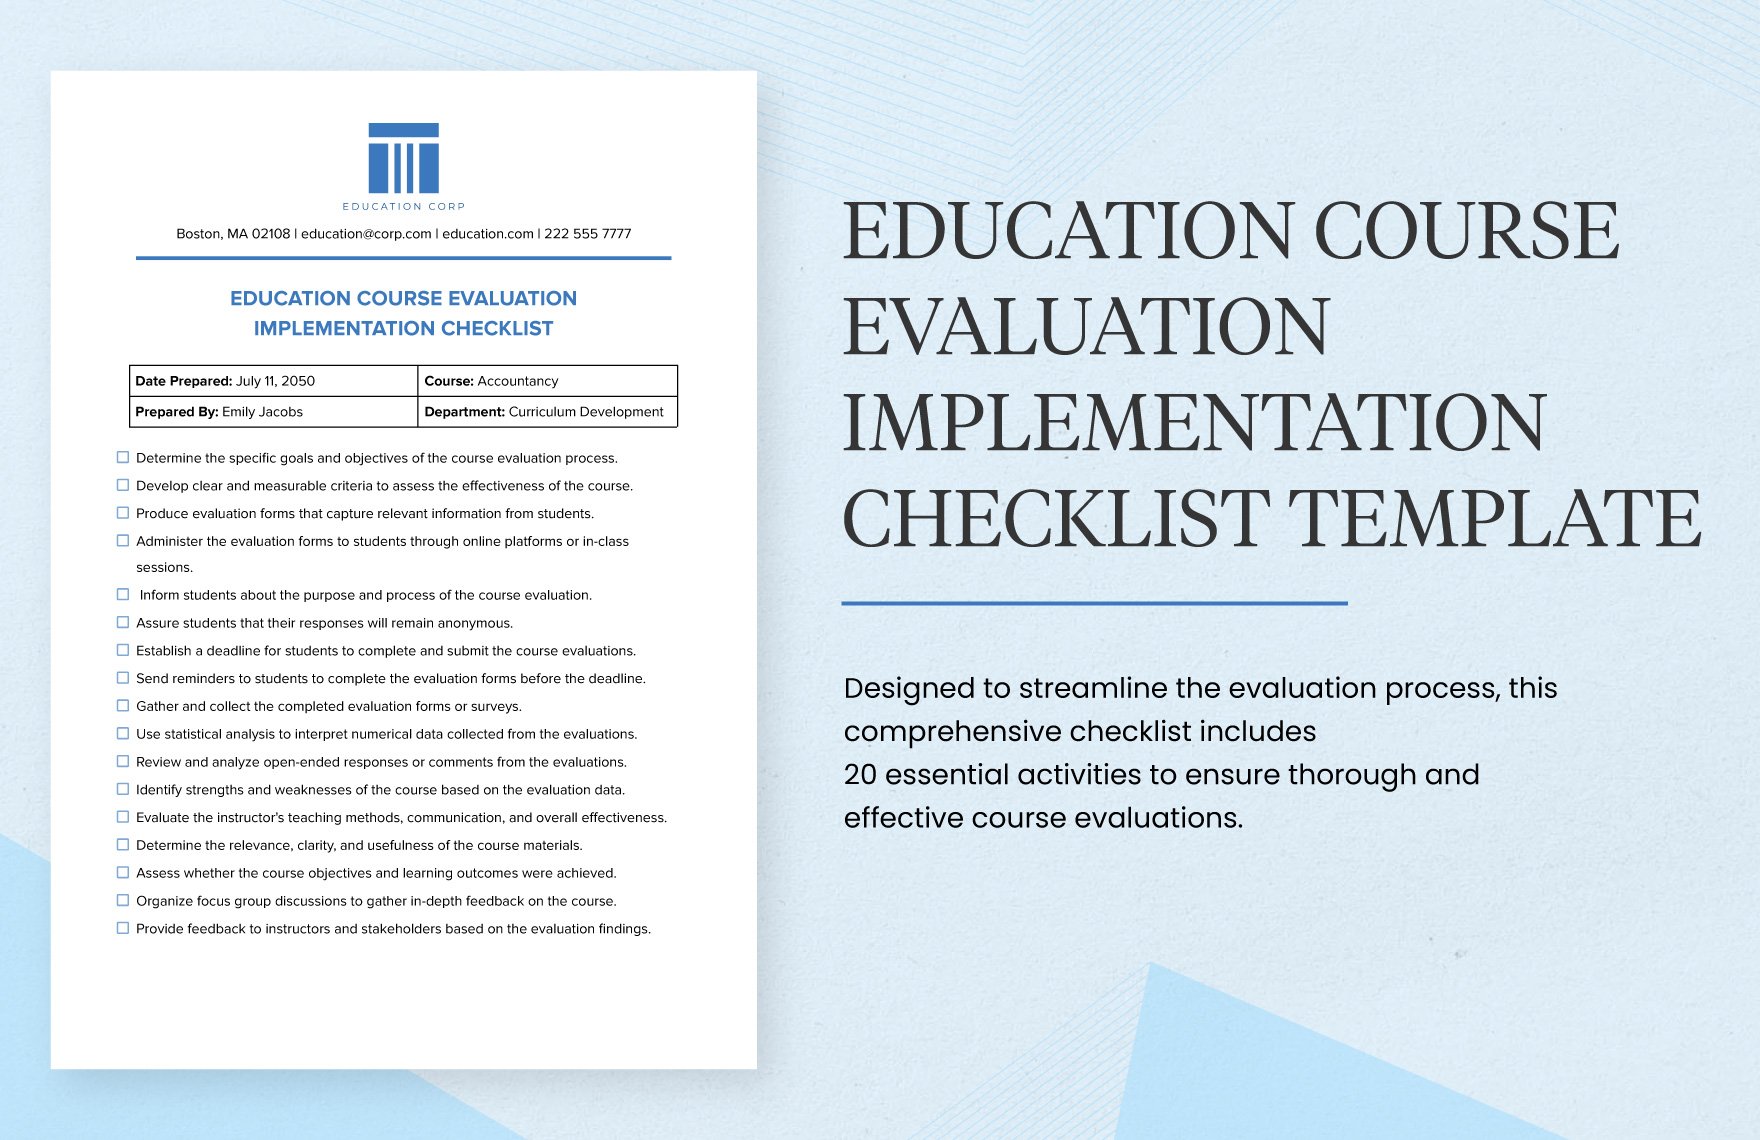 Education Course Evaluation Implementation Checklist Template